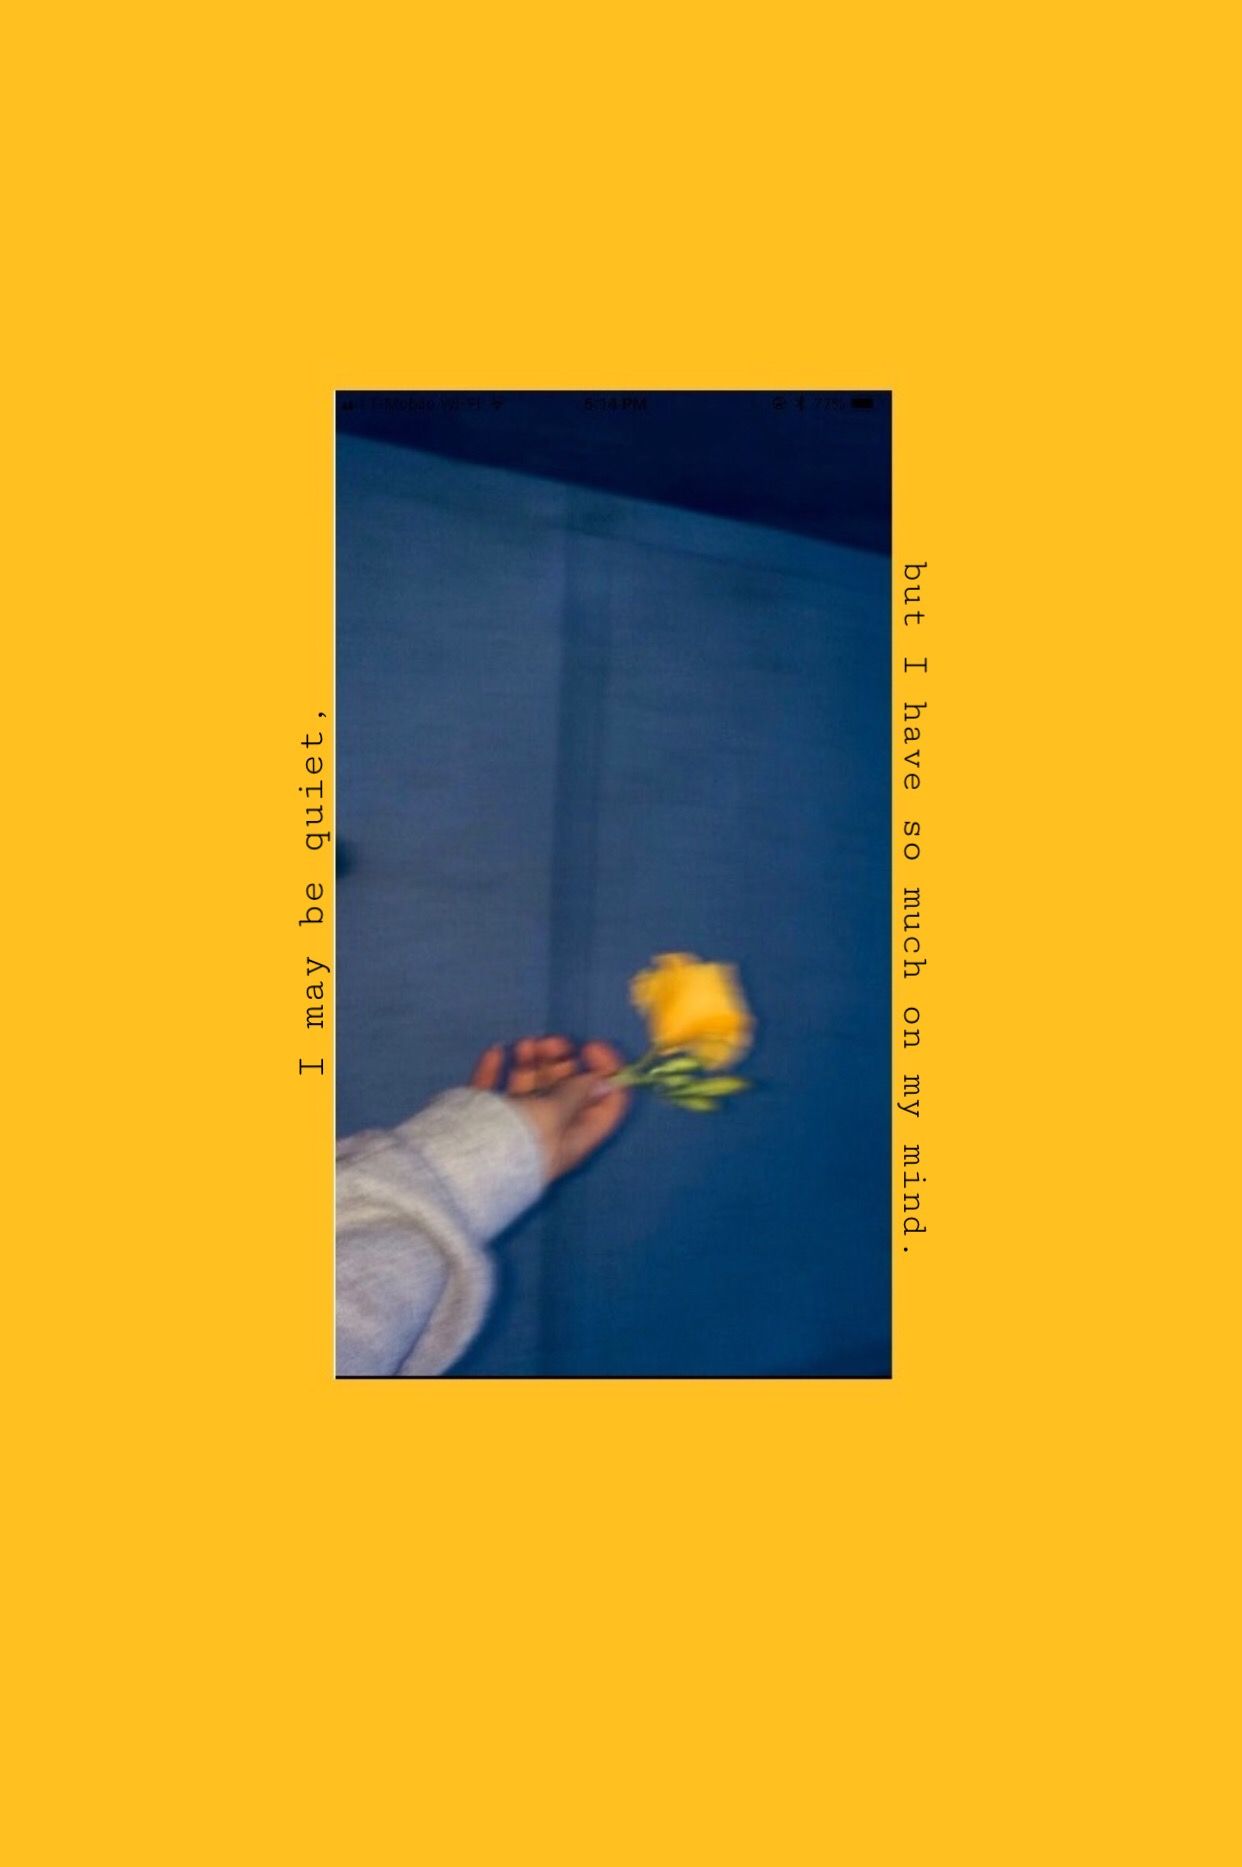 yellow aesthetic. iPhone wallpaper yellow